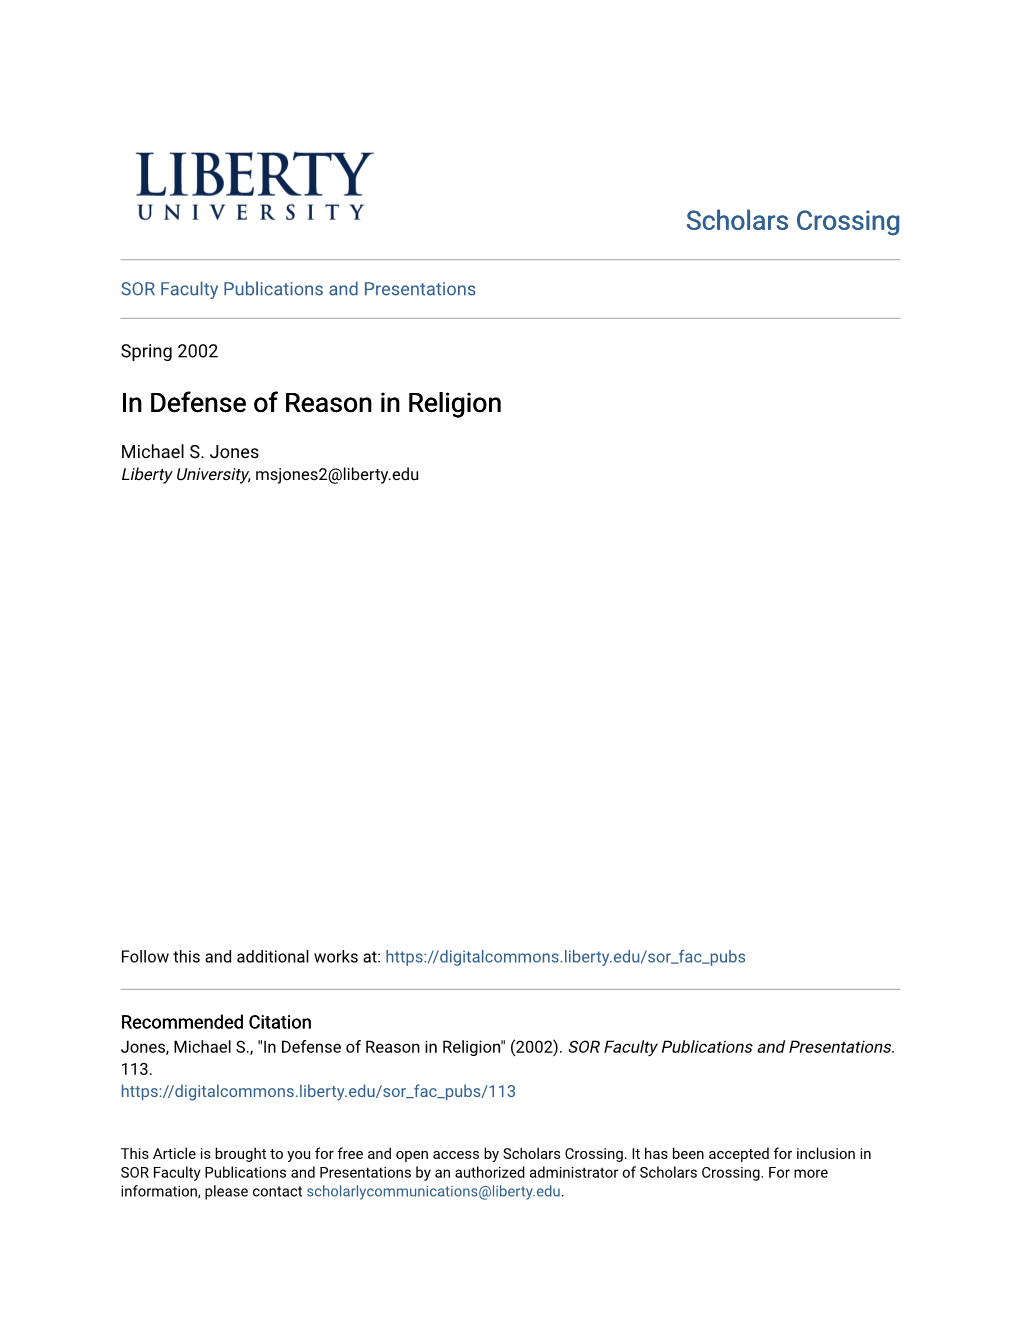 In Defense of Reason in Religion